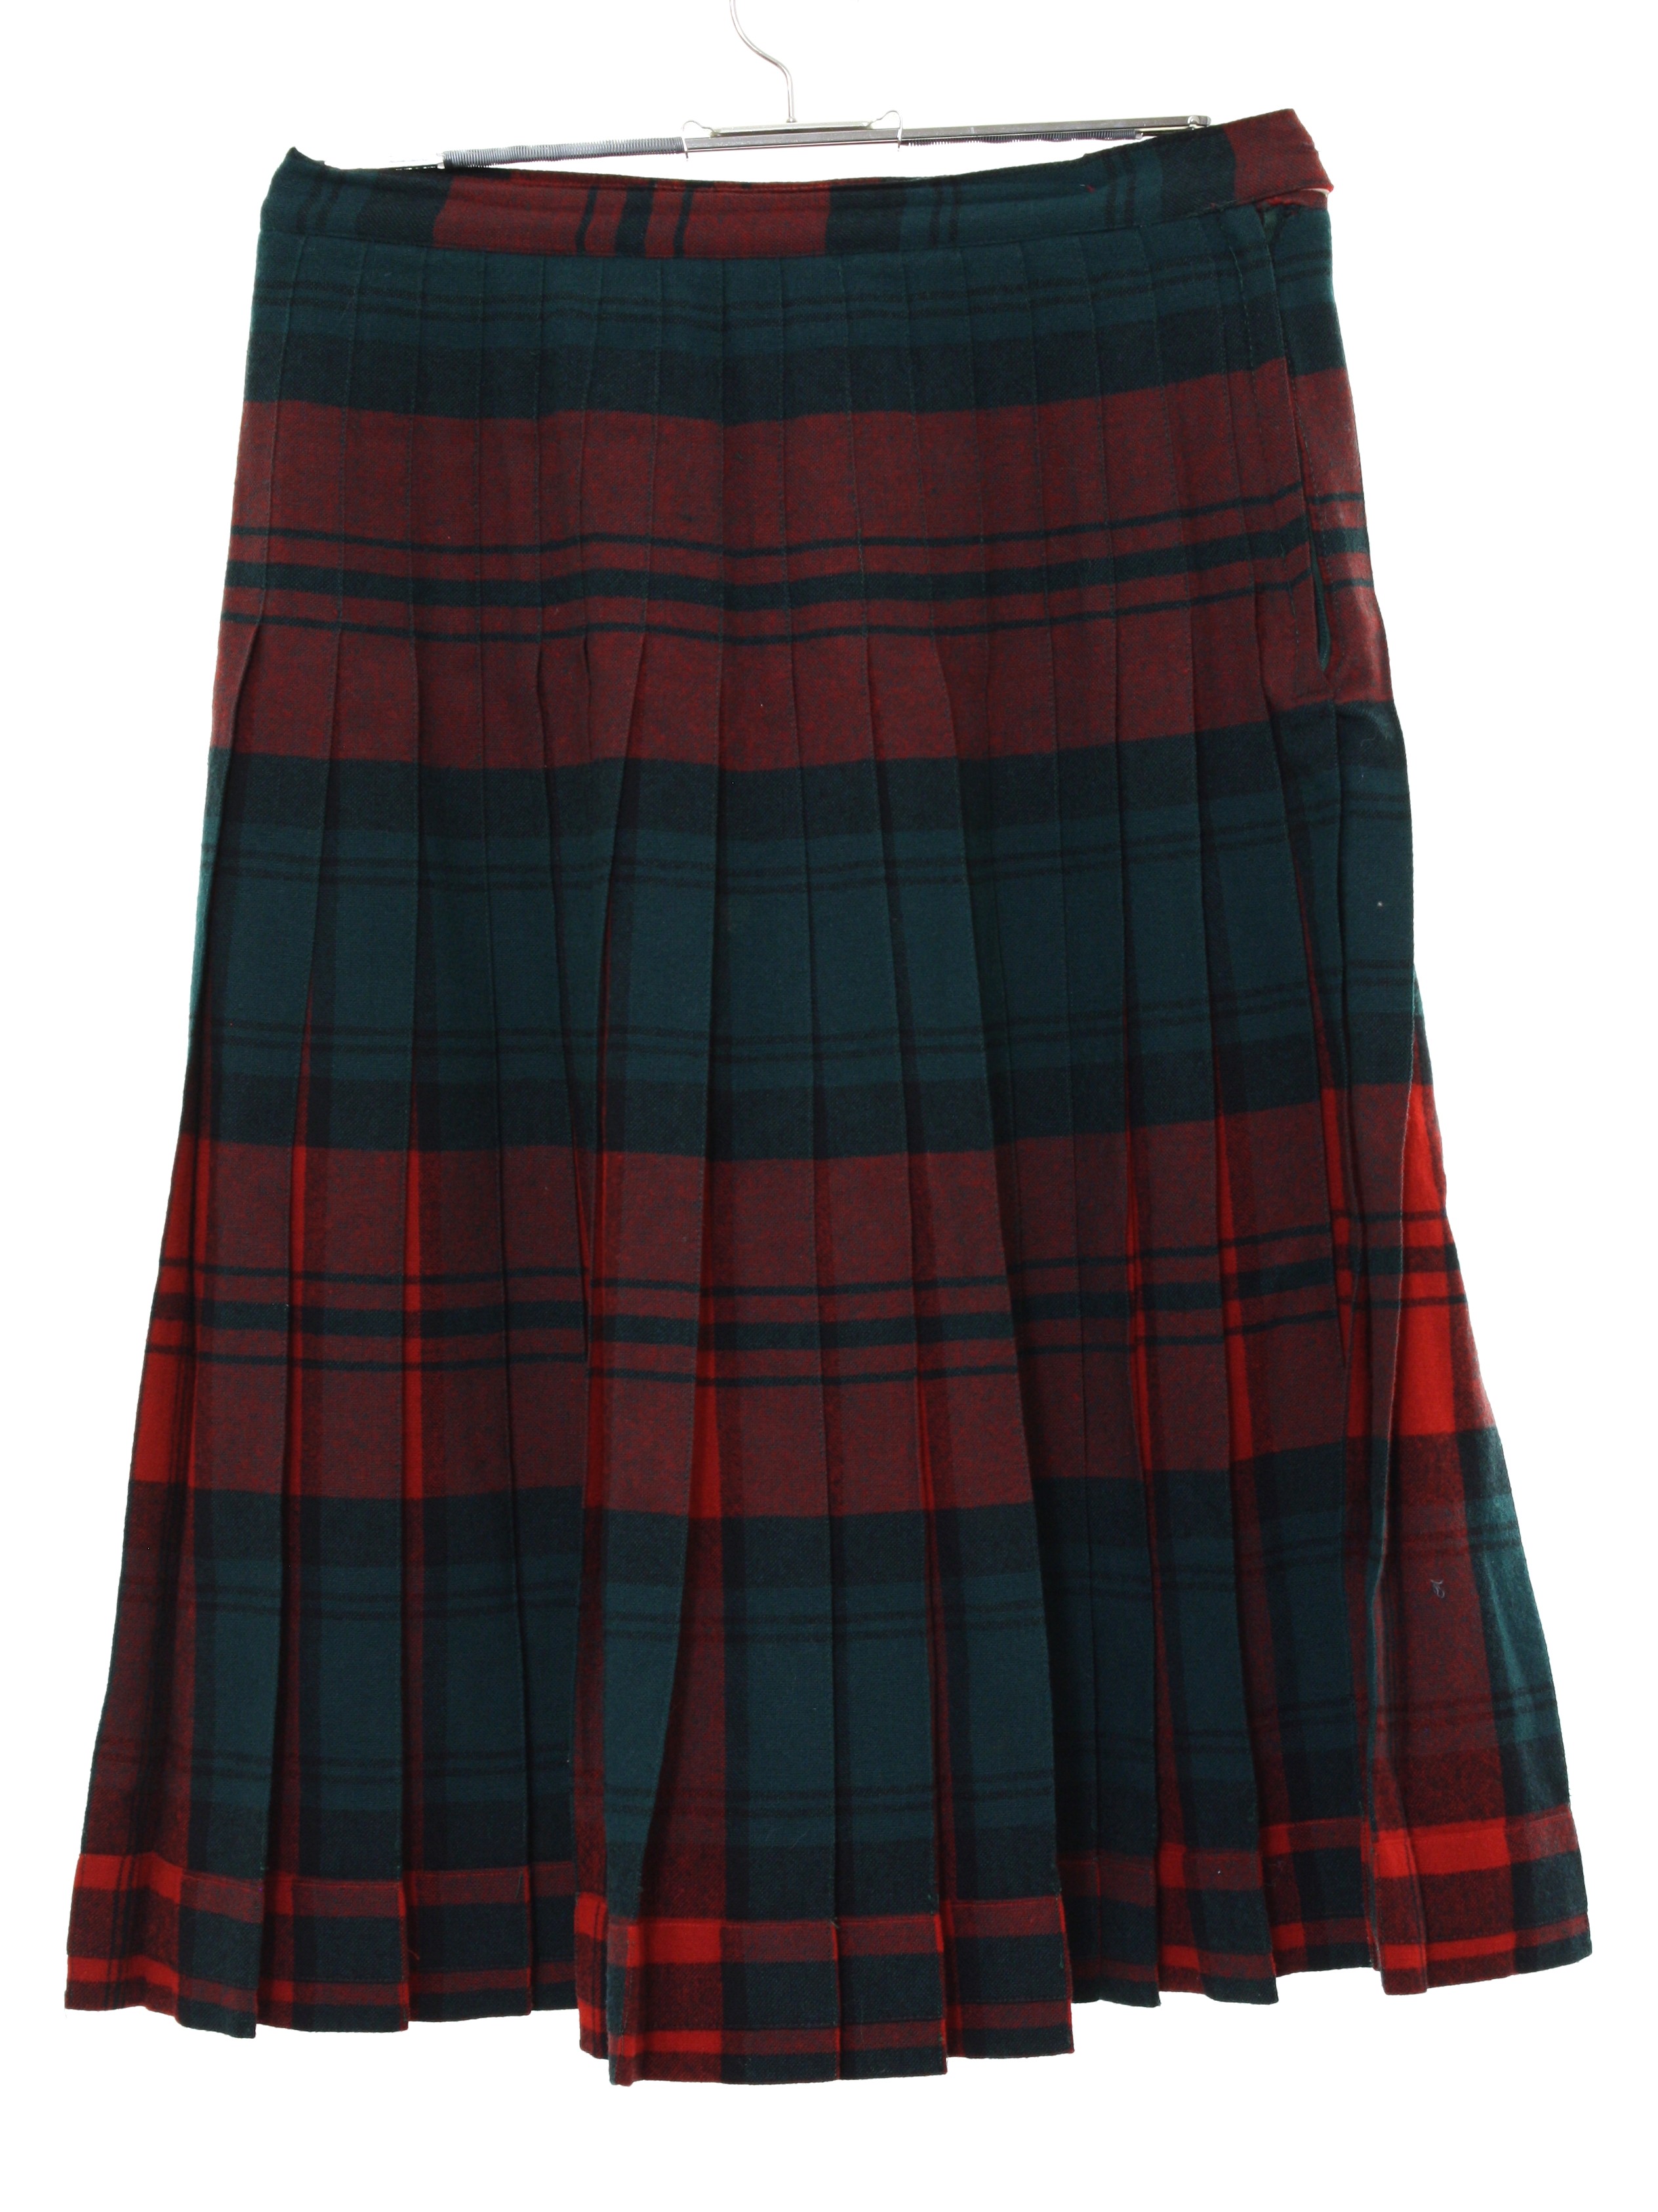 red plaid skirt 1950s